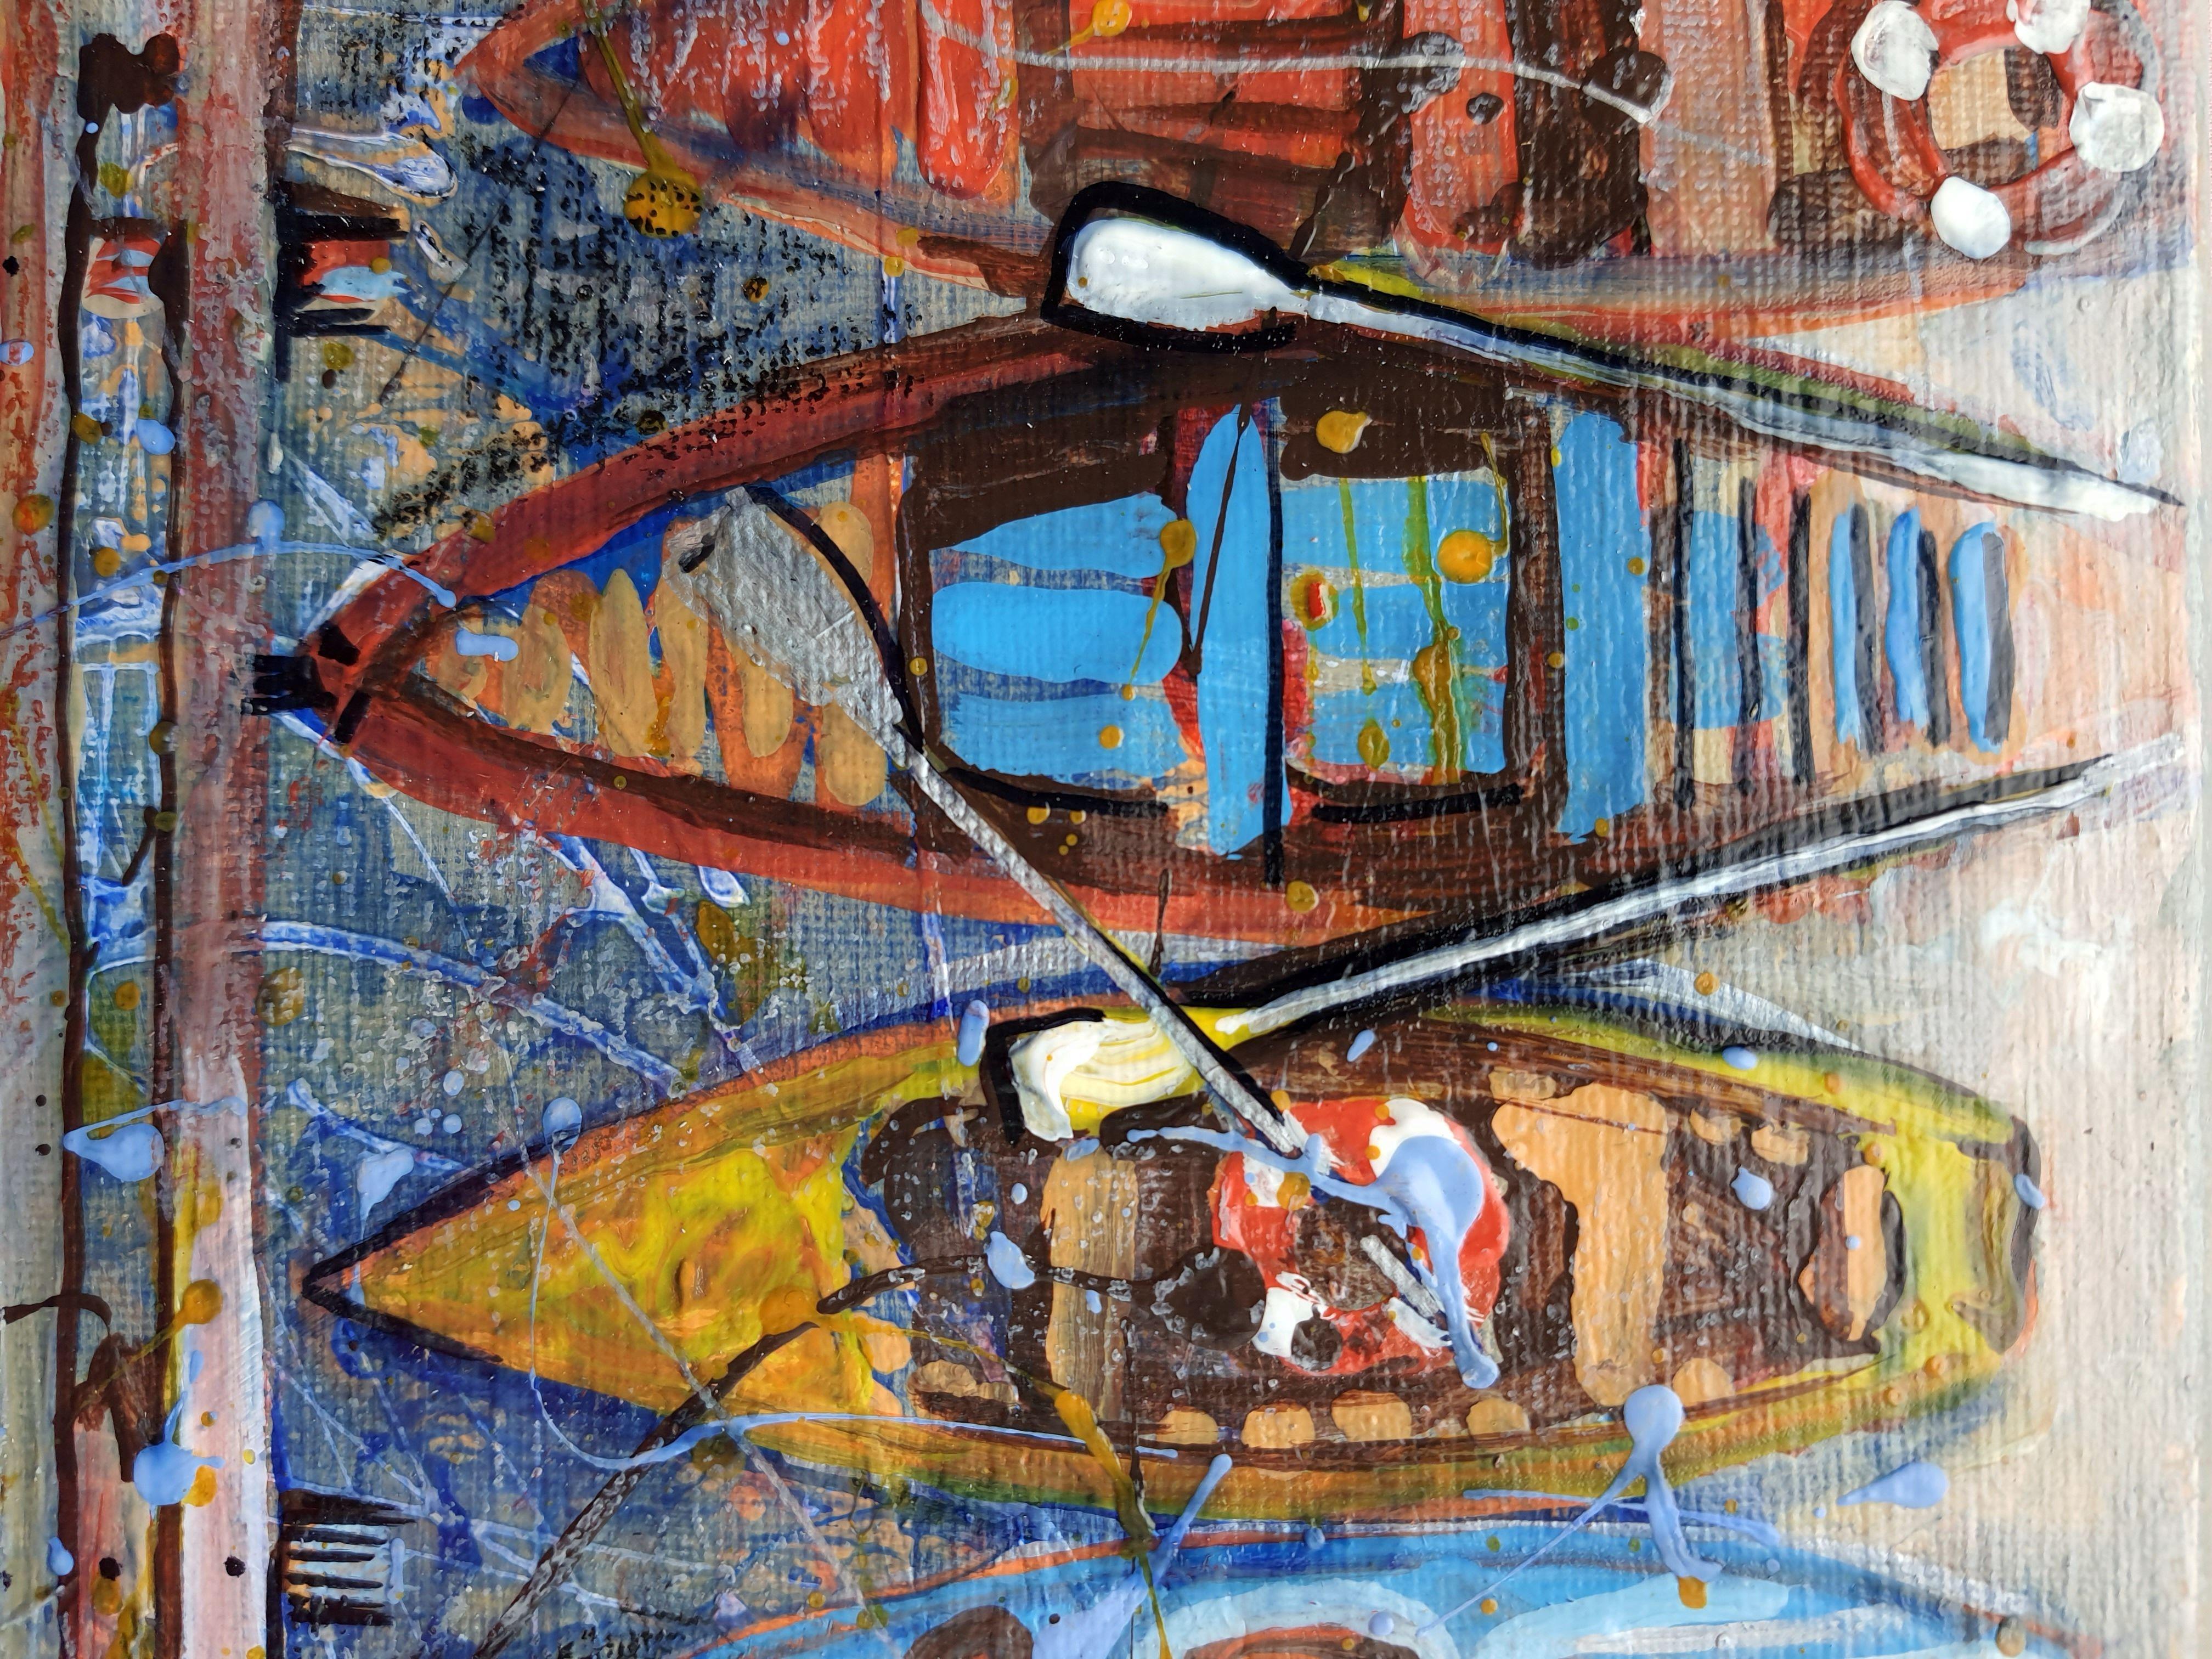 Multicolored Boats - Impressionist Painting by RAKHMET REDZHEPOV (RAMZI)